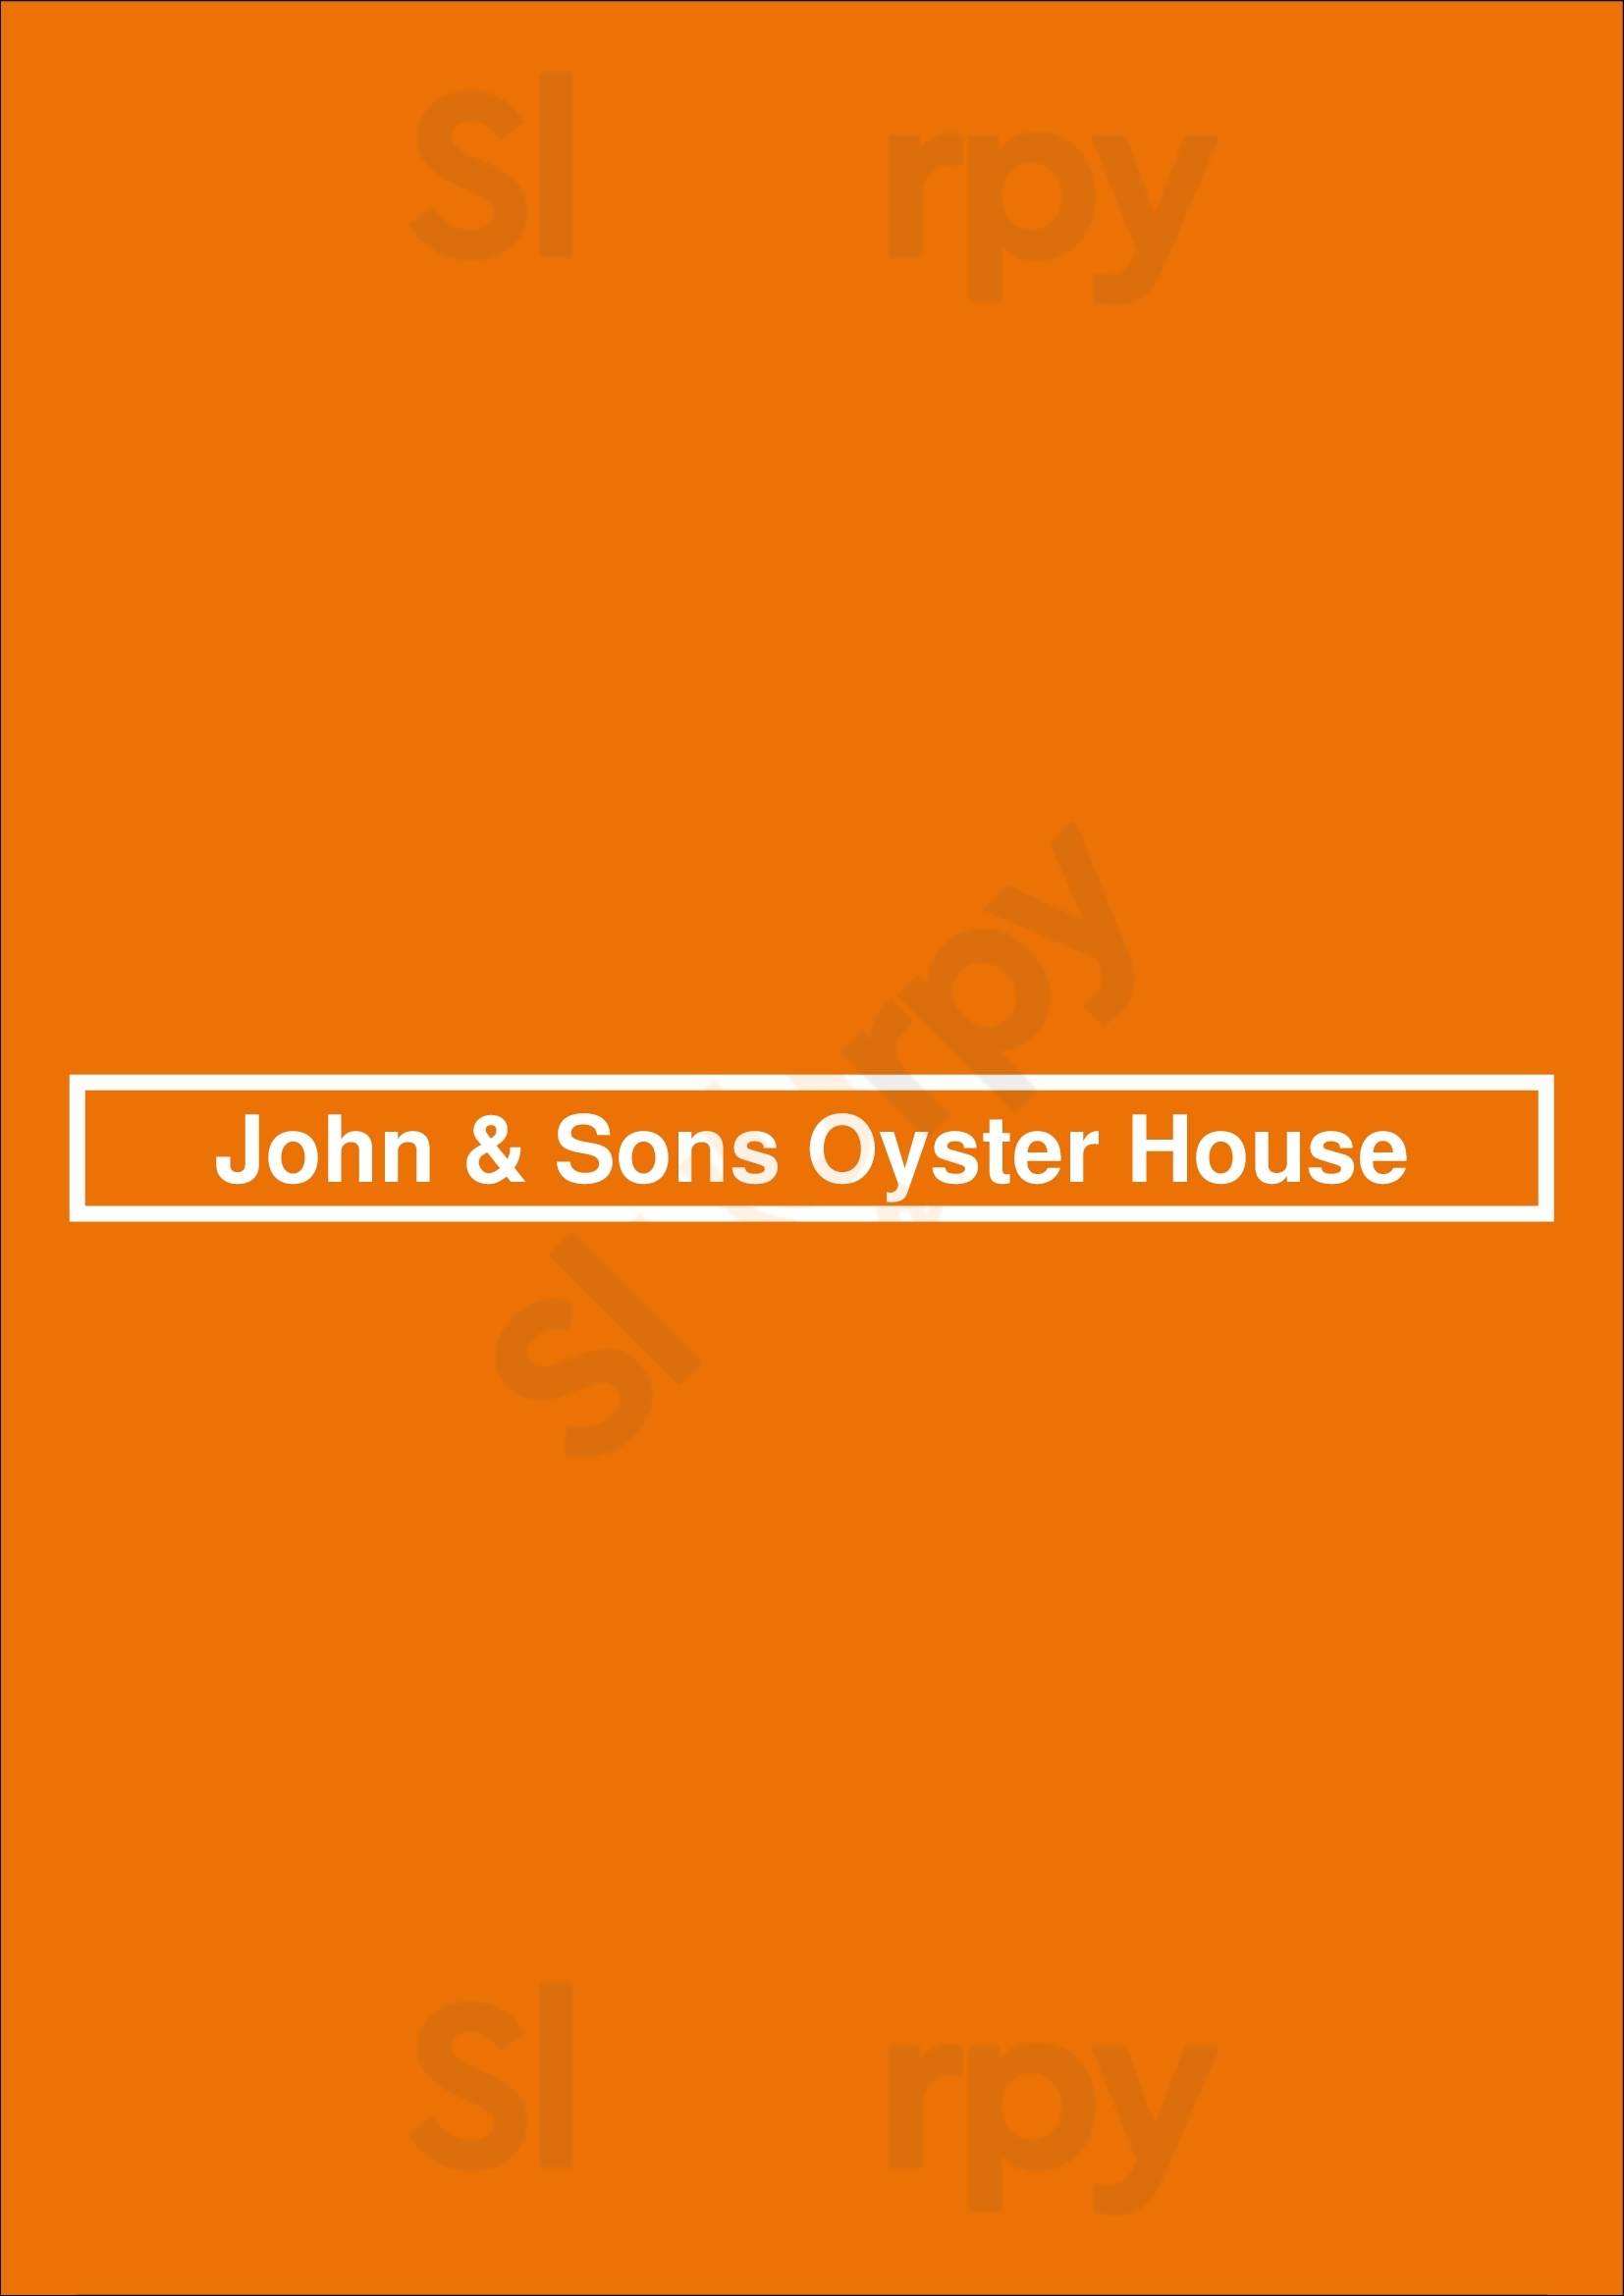 John & Sons Oyster House Toronto Menu - 1